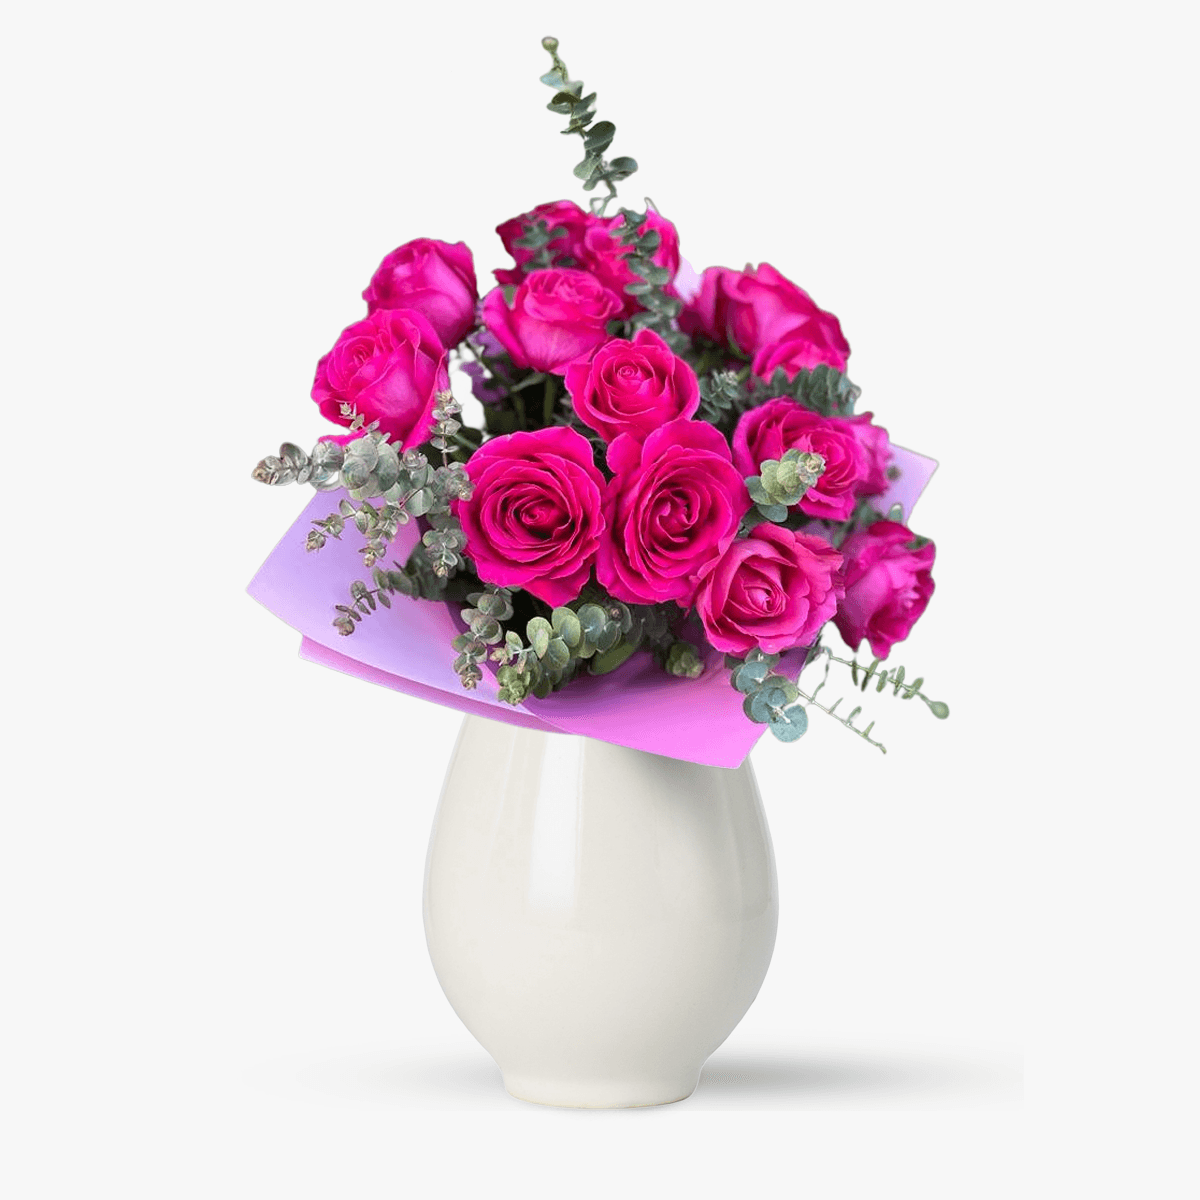 Buchet de 13 trandafiri roz – Standard Buchet